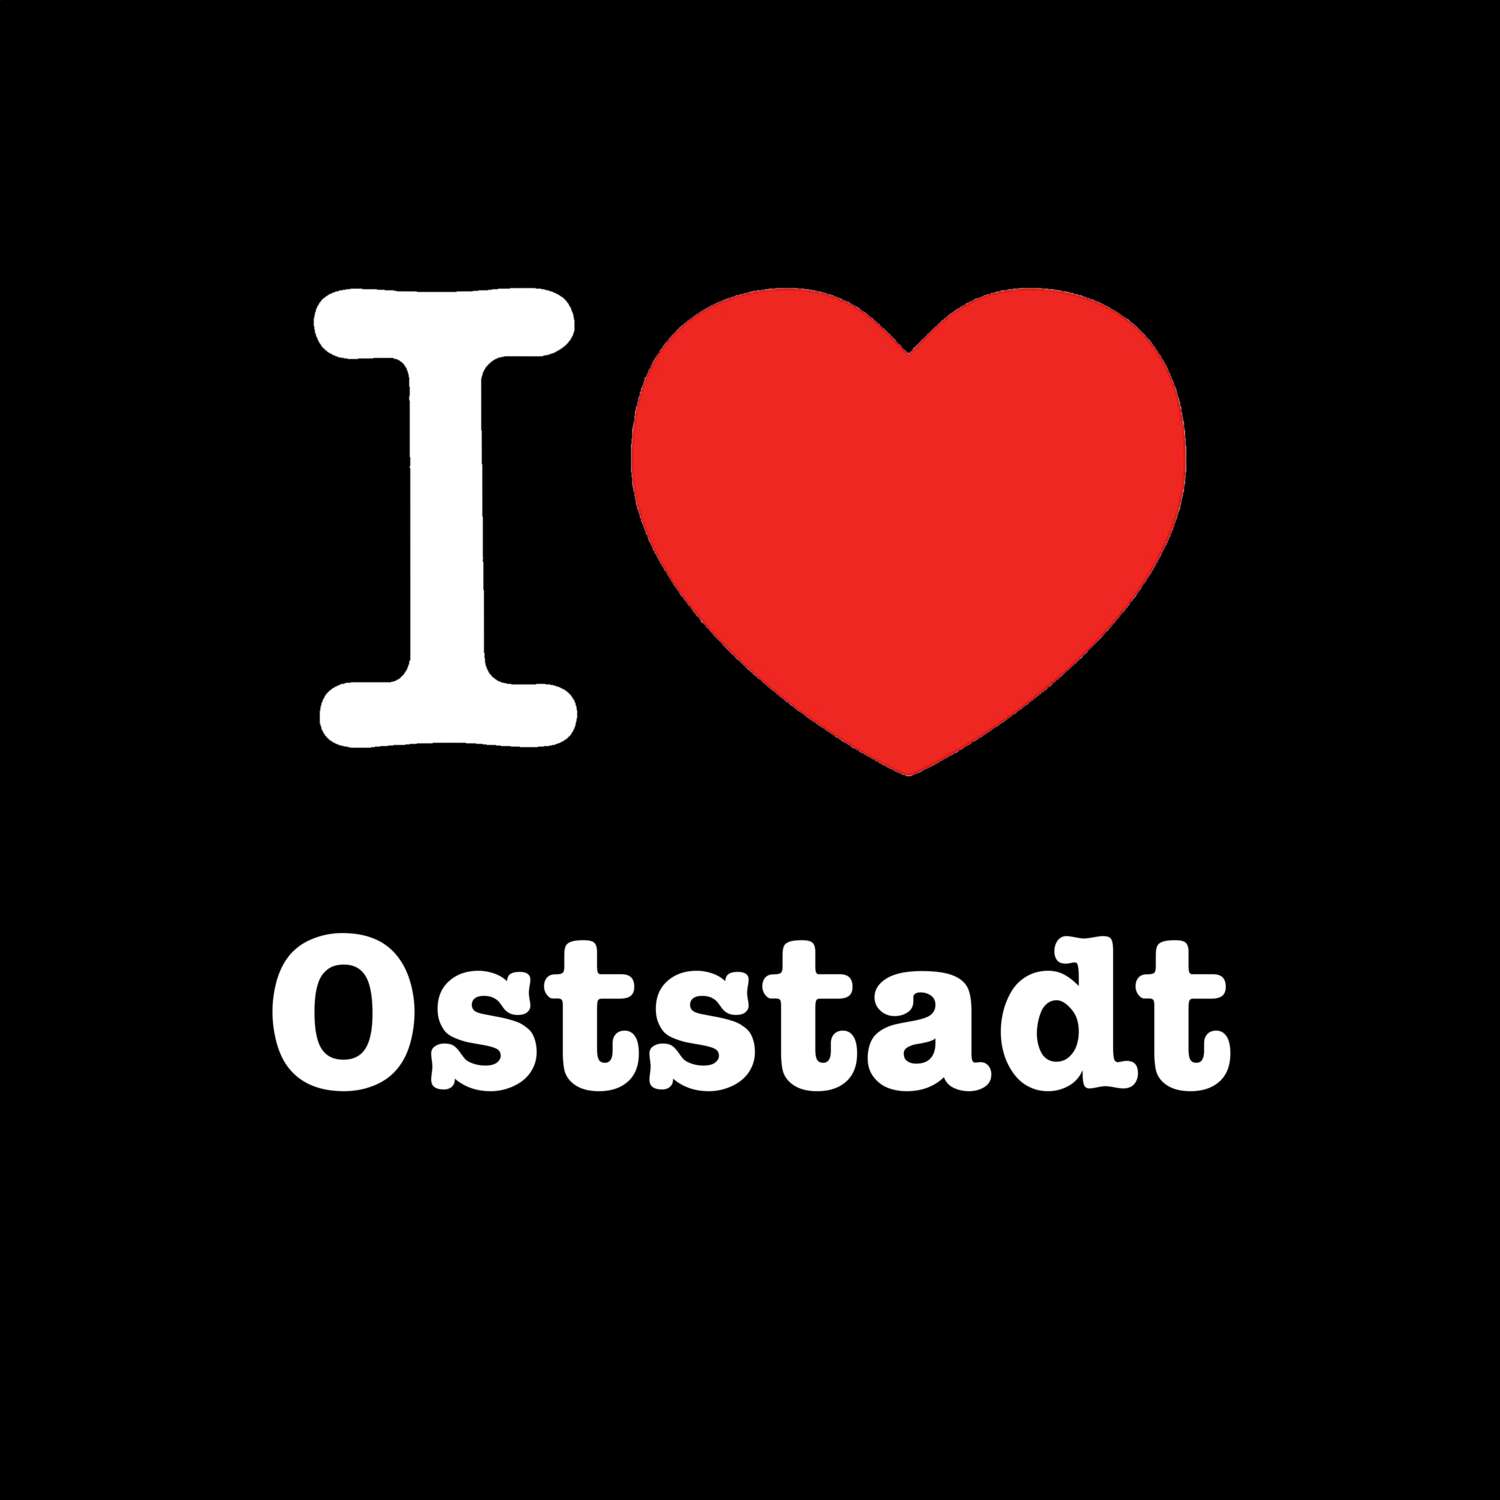 Oststadt T-Shirt »I love«